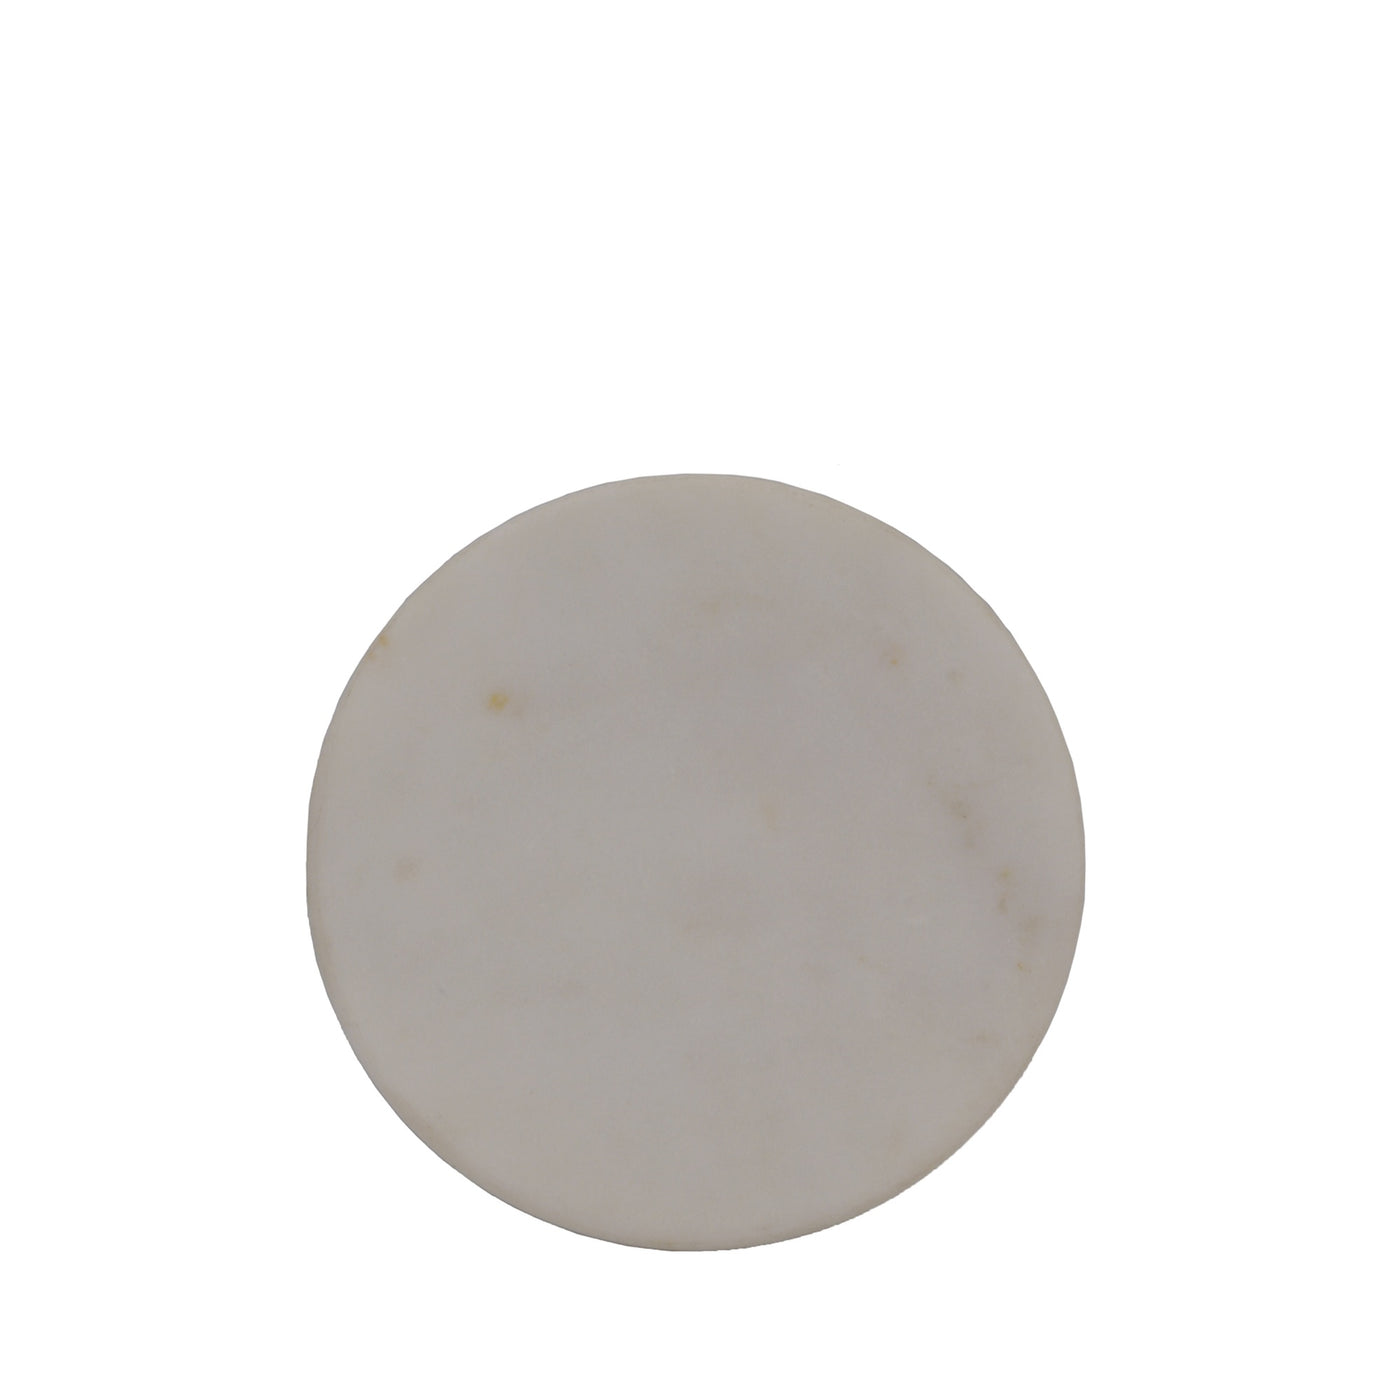 Tade Pays du Levant Marble Soap Dish - White